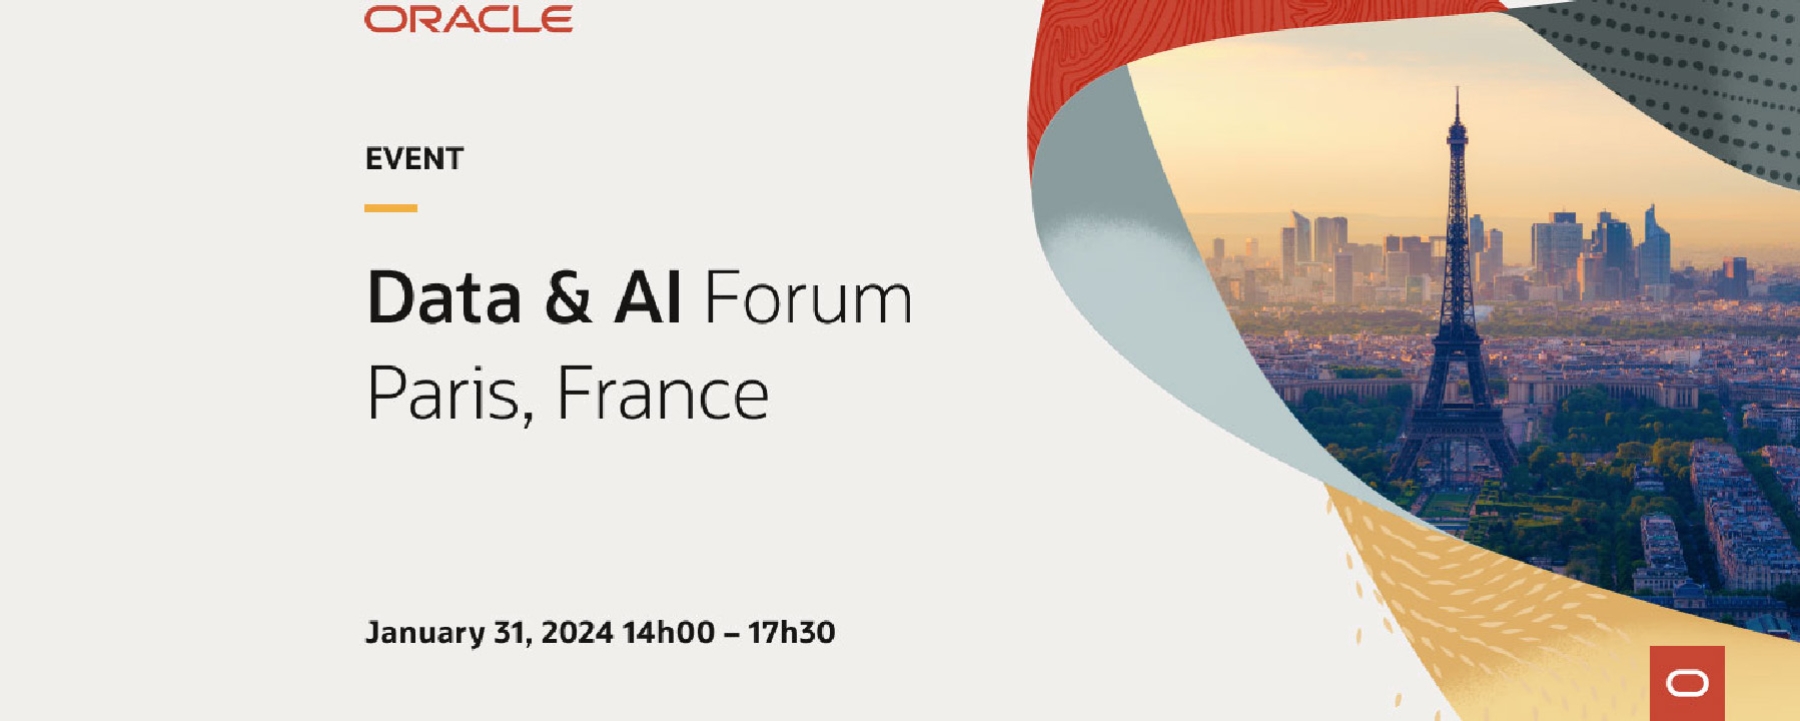 Oracle Data & AI Forum